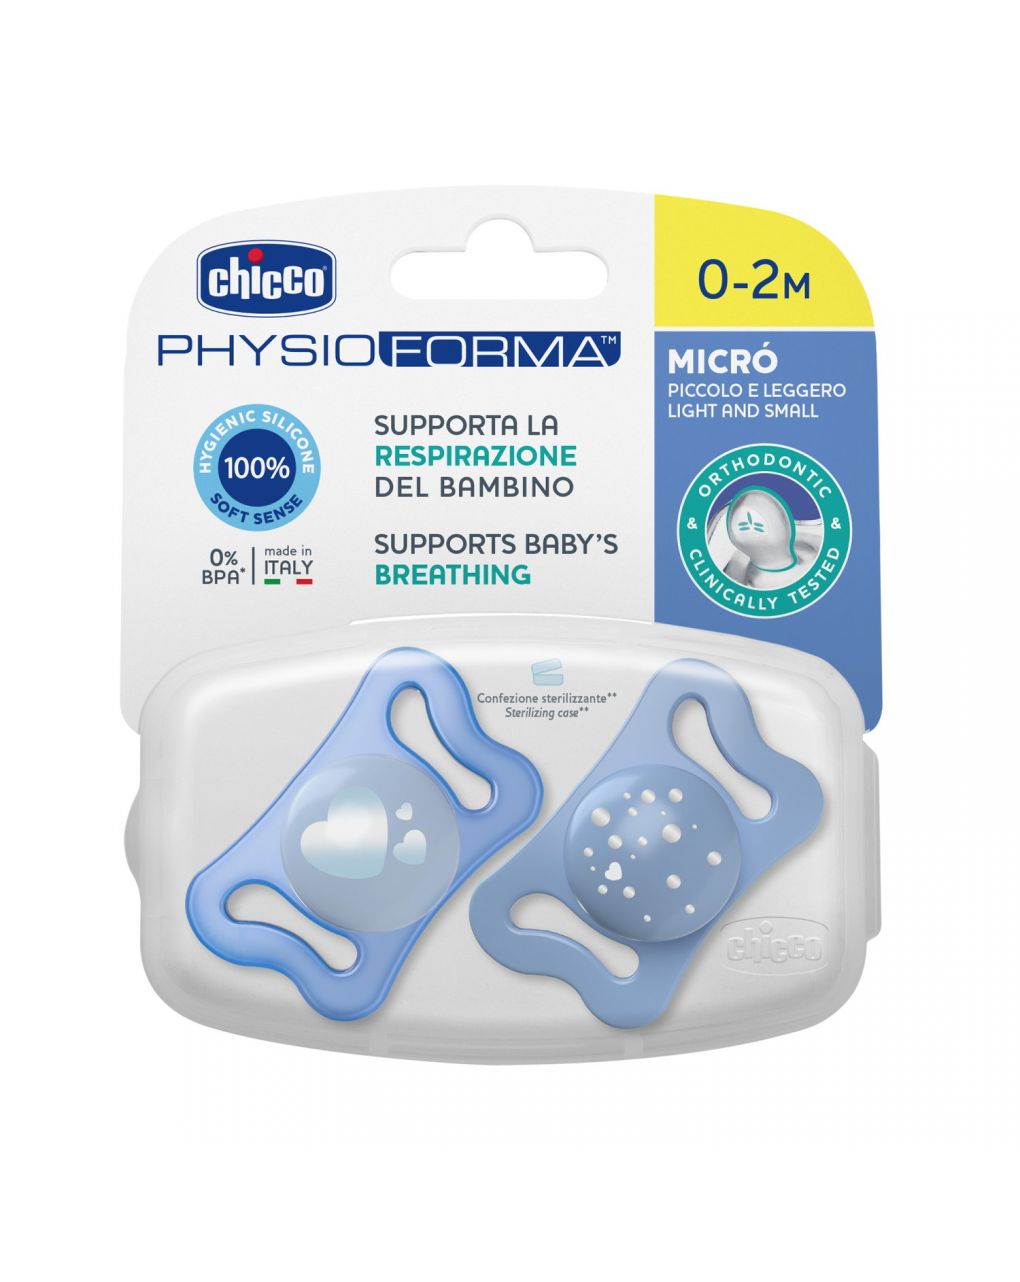 Physioforma micrò blue silicone 0-2 meses 2 peças - chicco - Chicco